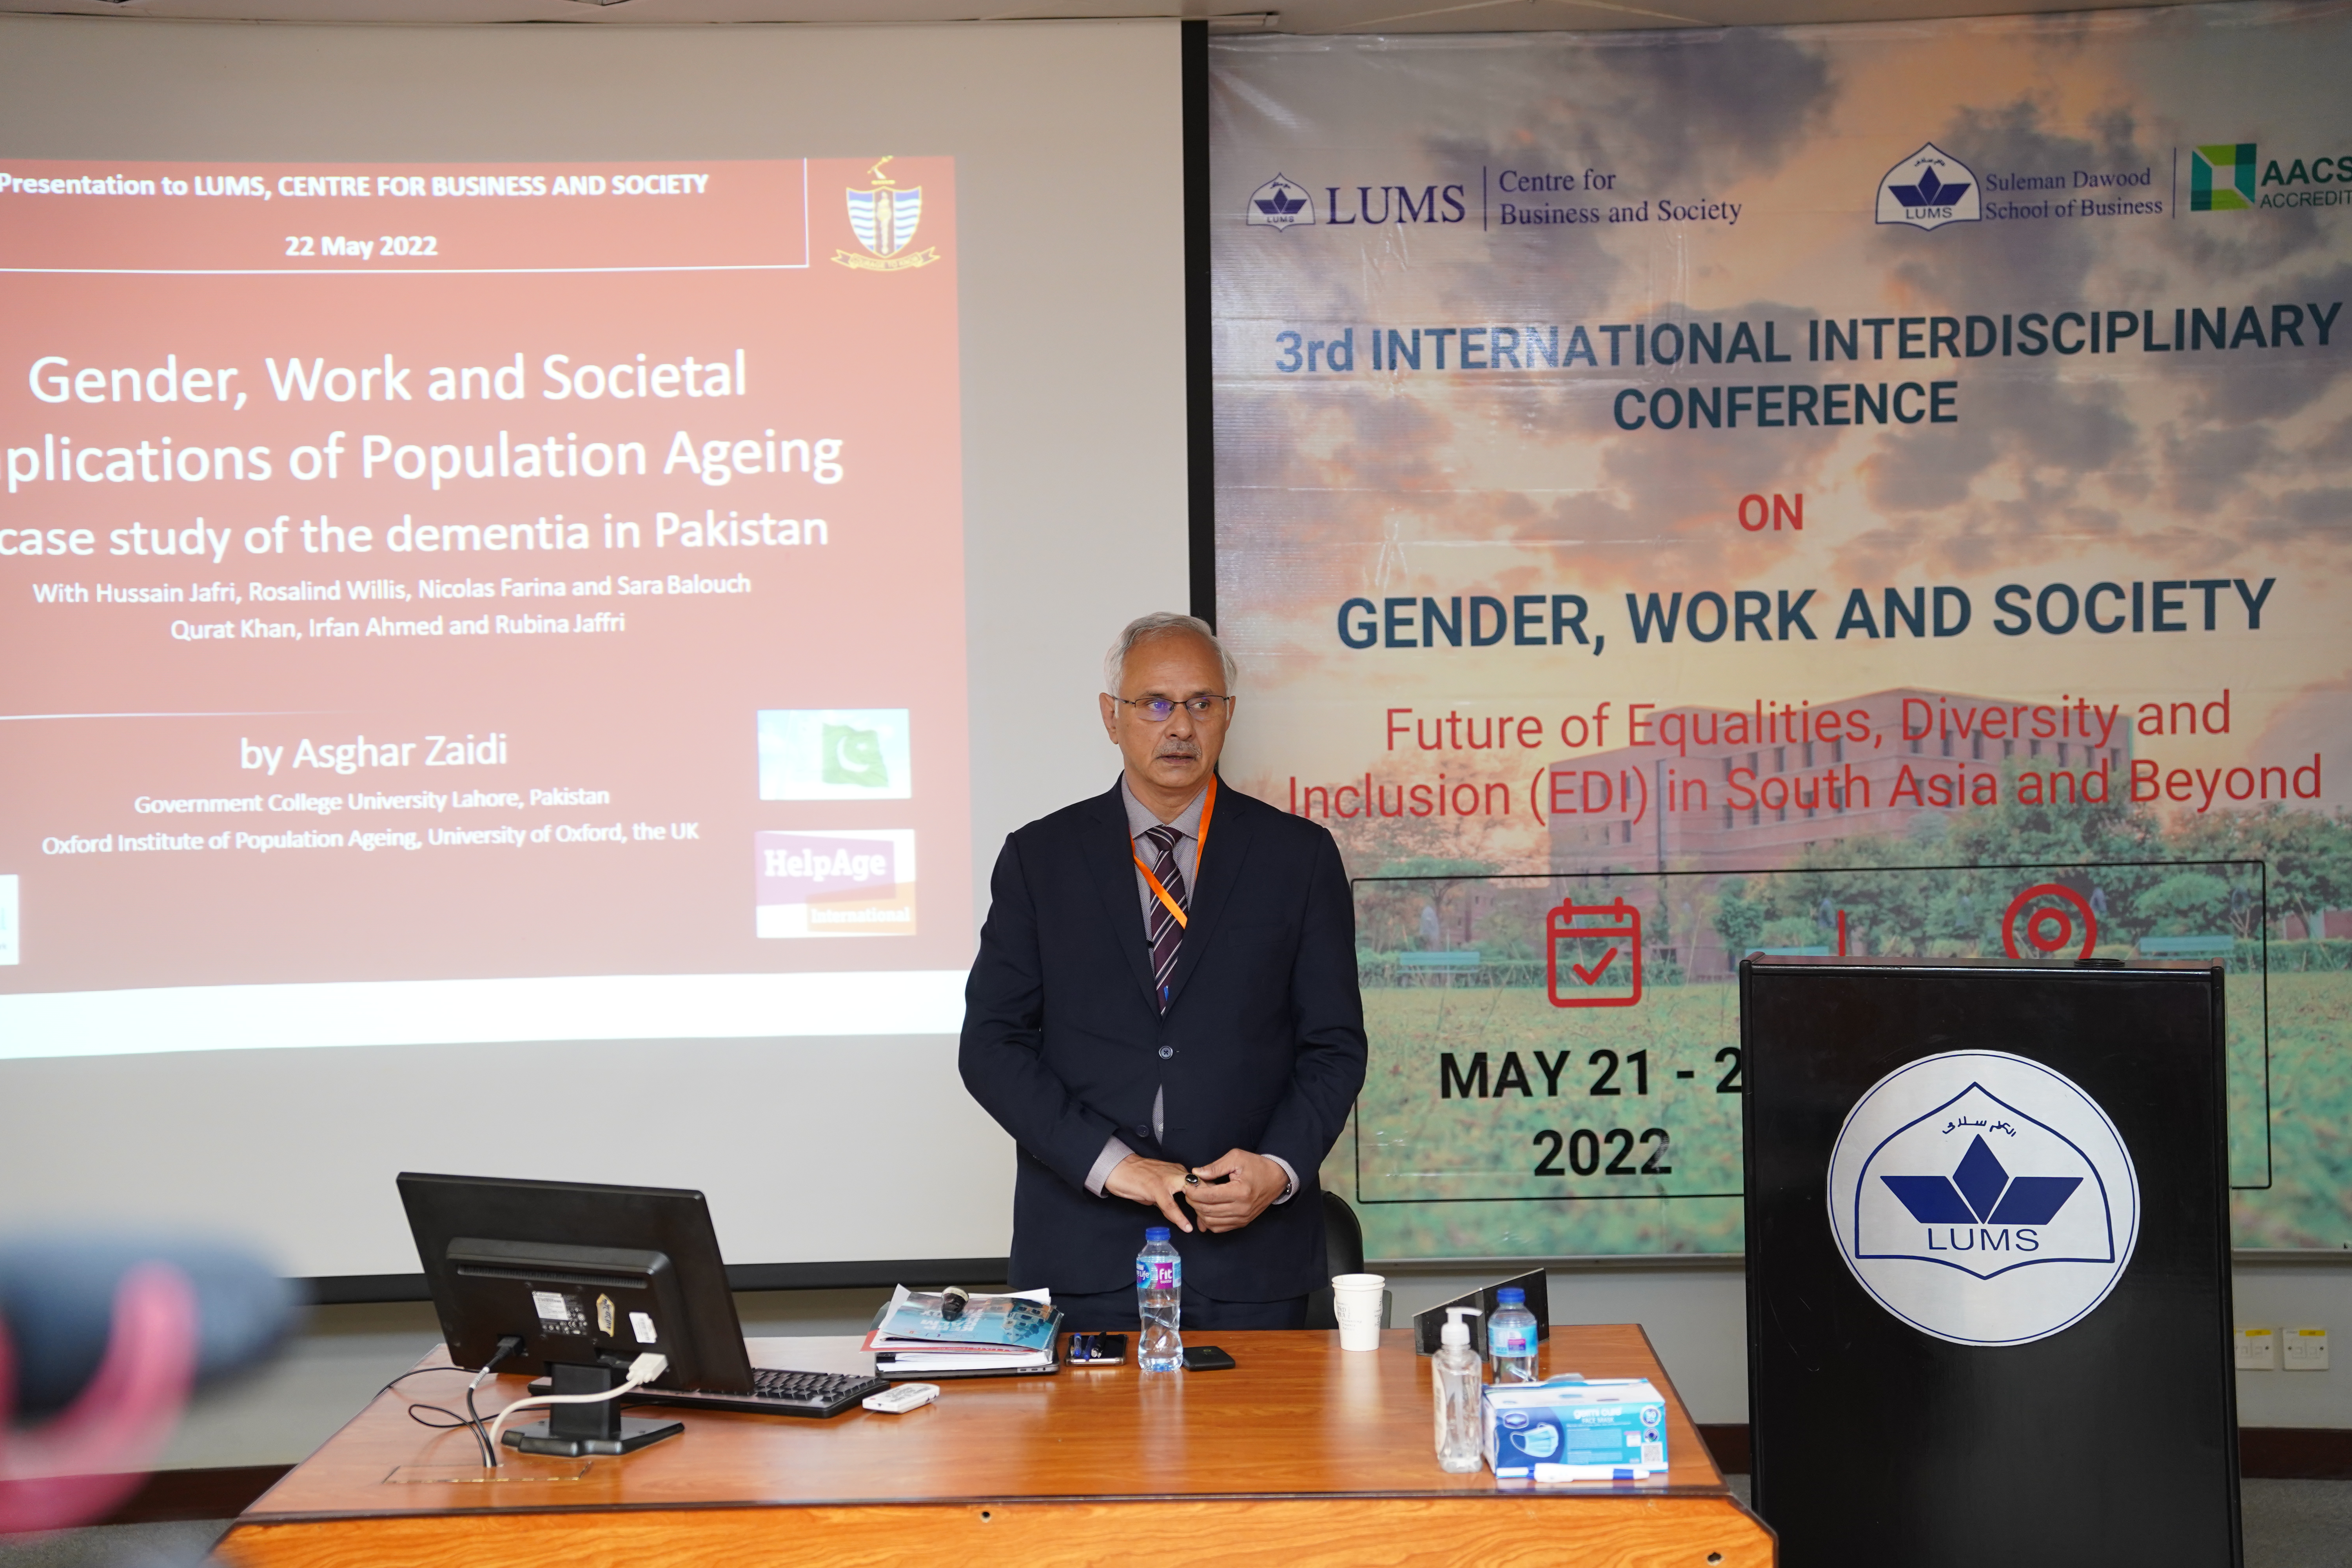 Prof. Dr. Asghar Zaidi, Vice Chancellor Government College University, Lahore